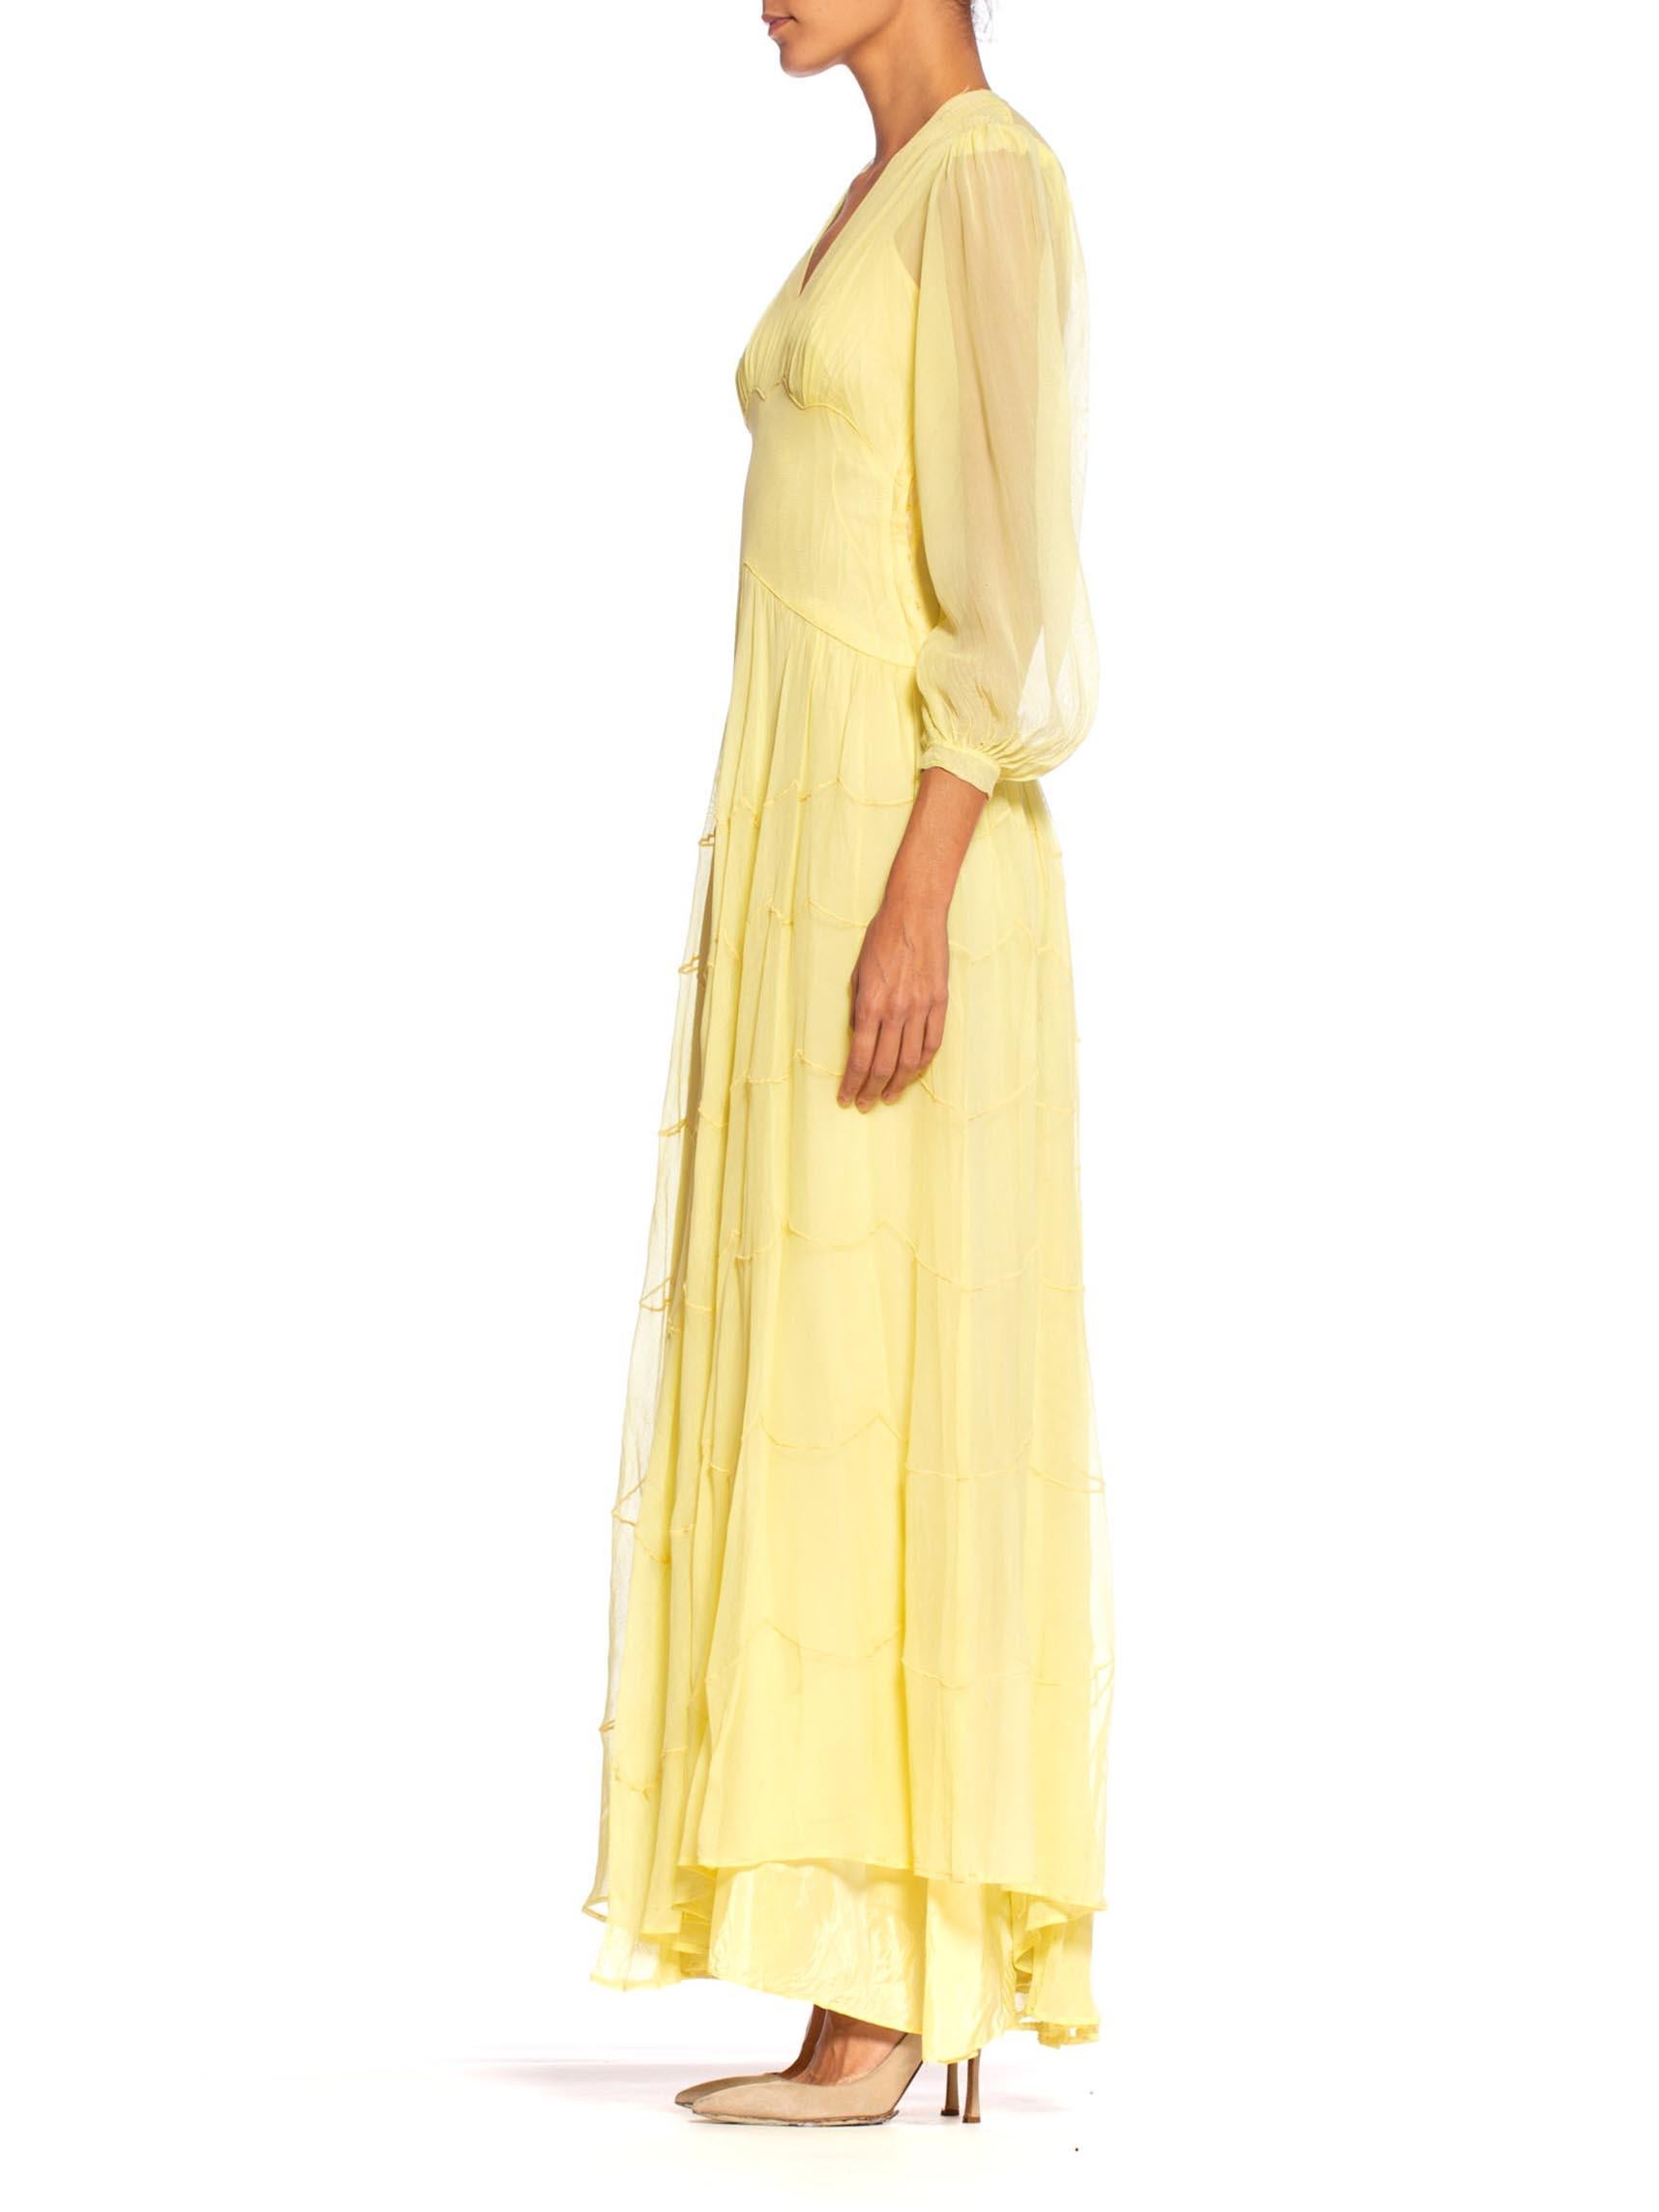 Women's 1940's Lemon Yellow Sheer Net Gown